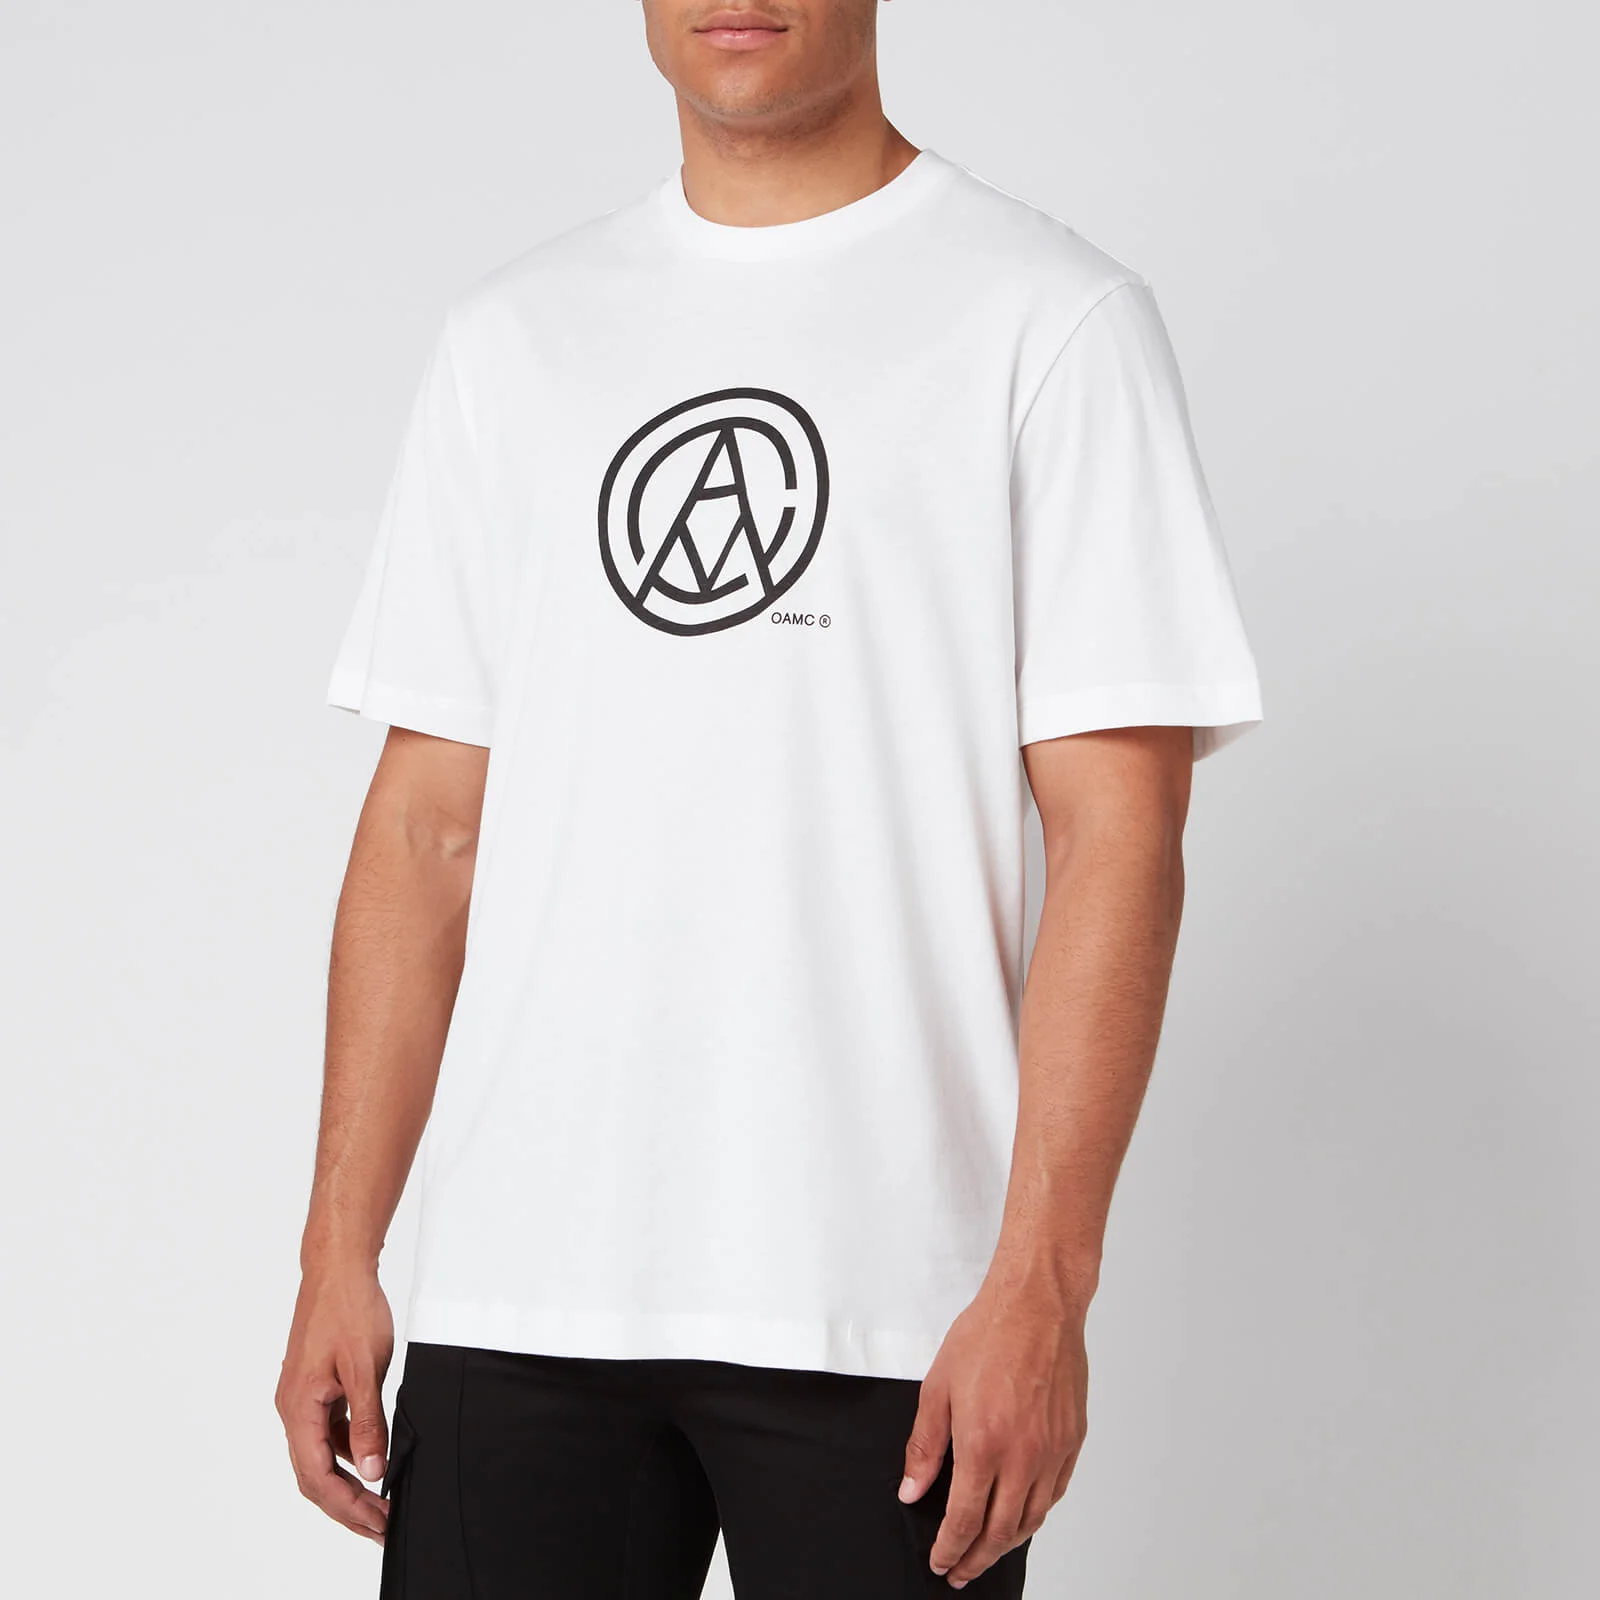 OAMC Men's Mono T-Shirt - White Image 1